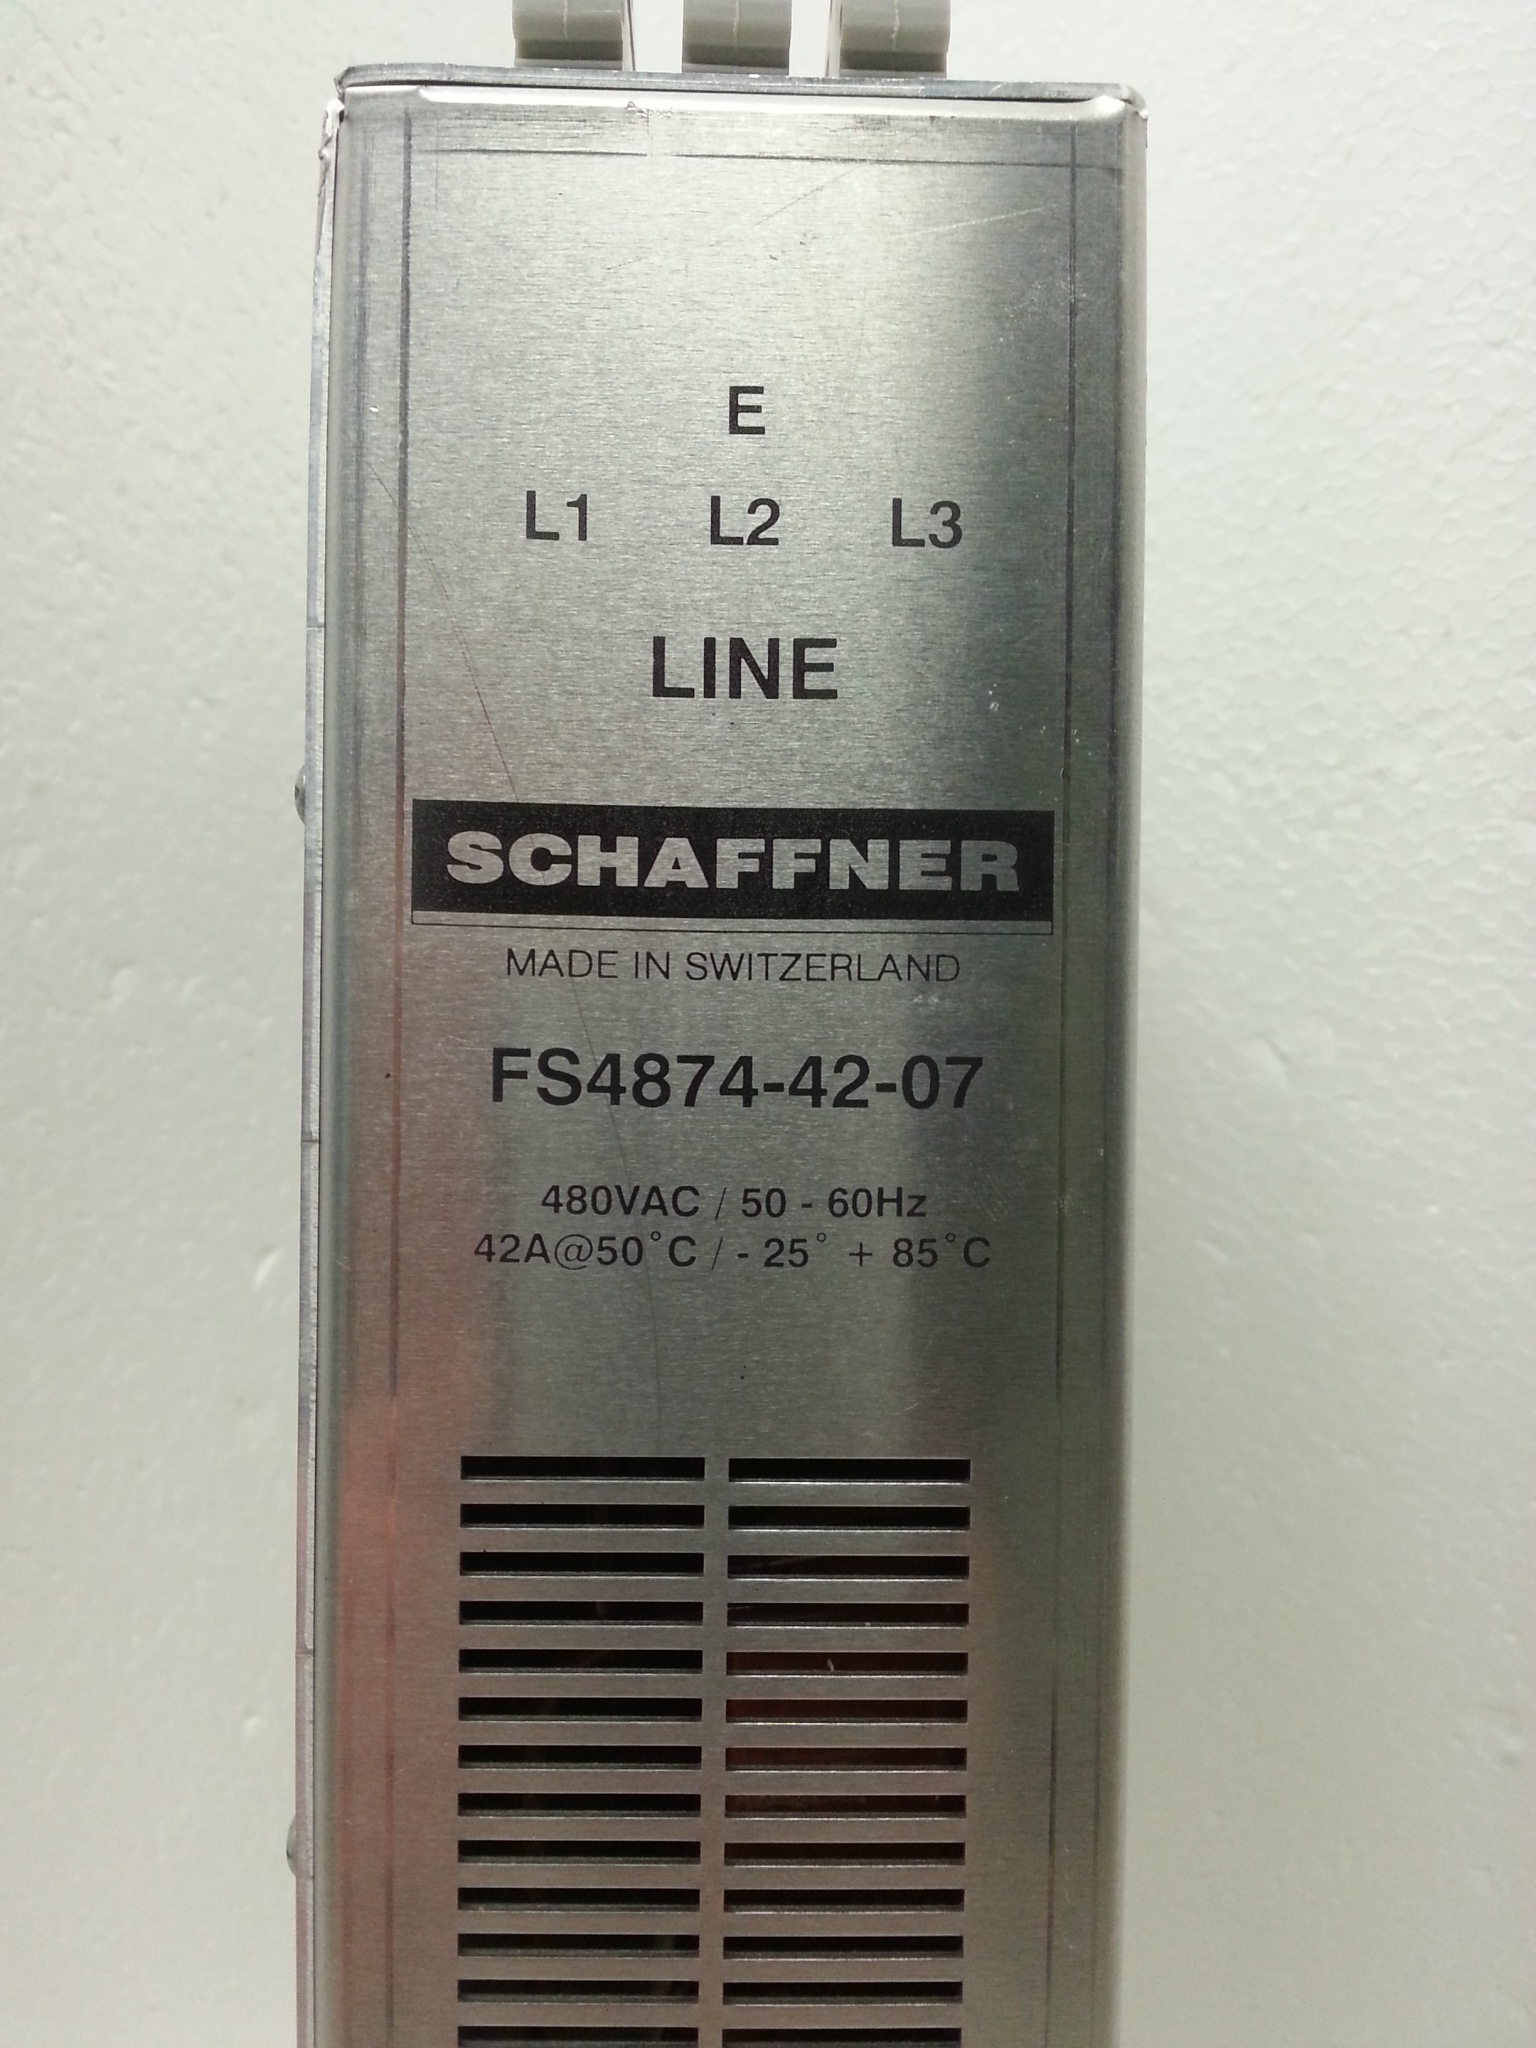 FS4874-42-07 Schaffner EMI EMC frequency drive filter